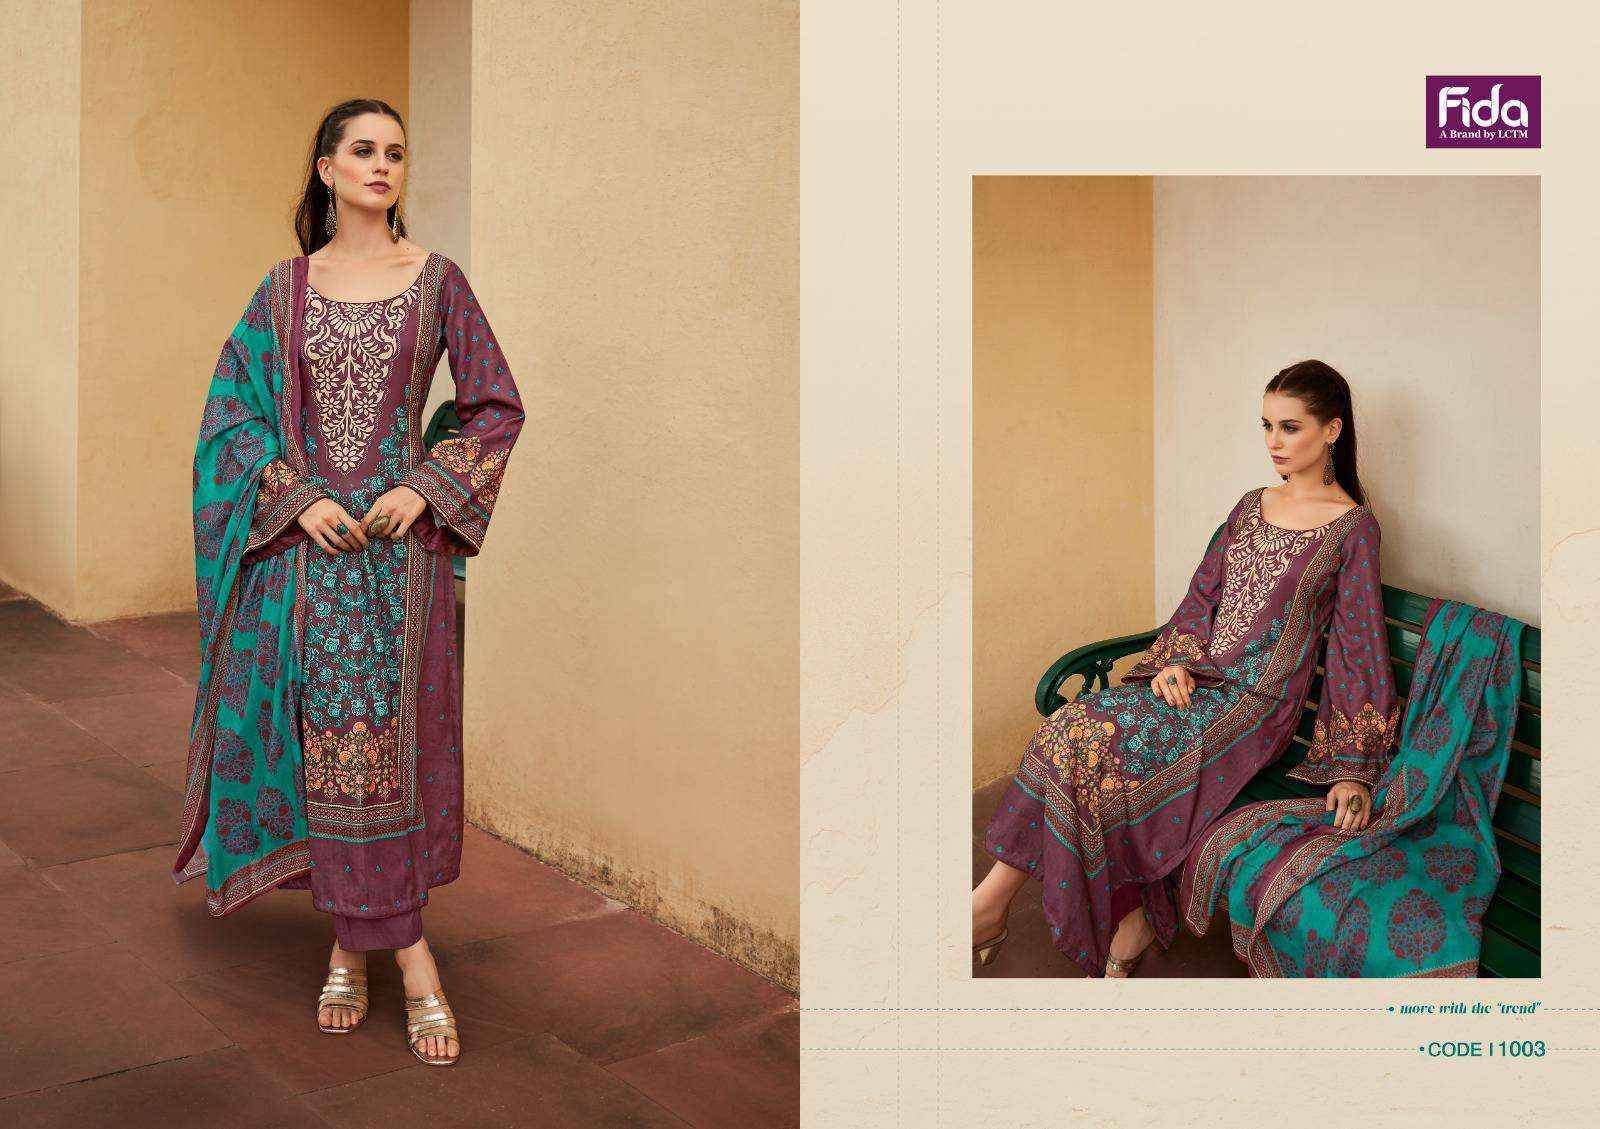 Fida Gulzaar Pashmina Dress Material 6 pcs Catalogue - Wholesale Factory Outlet